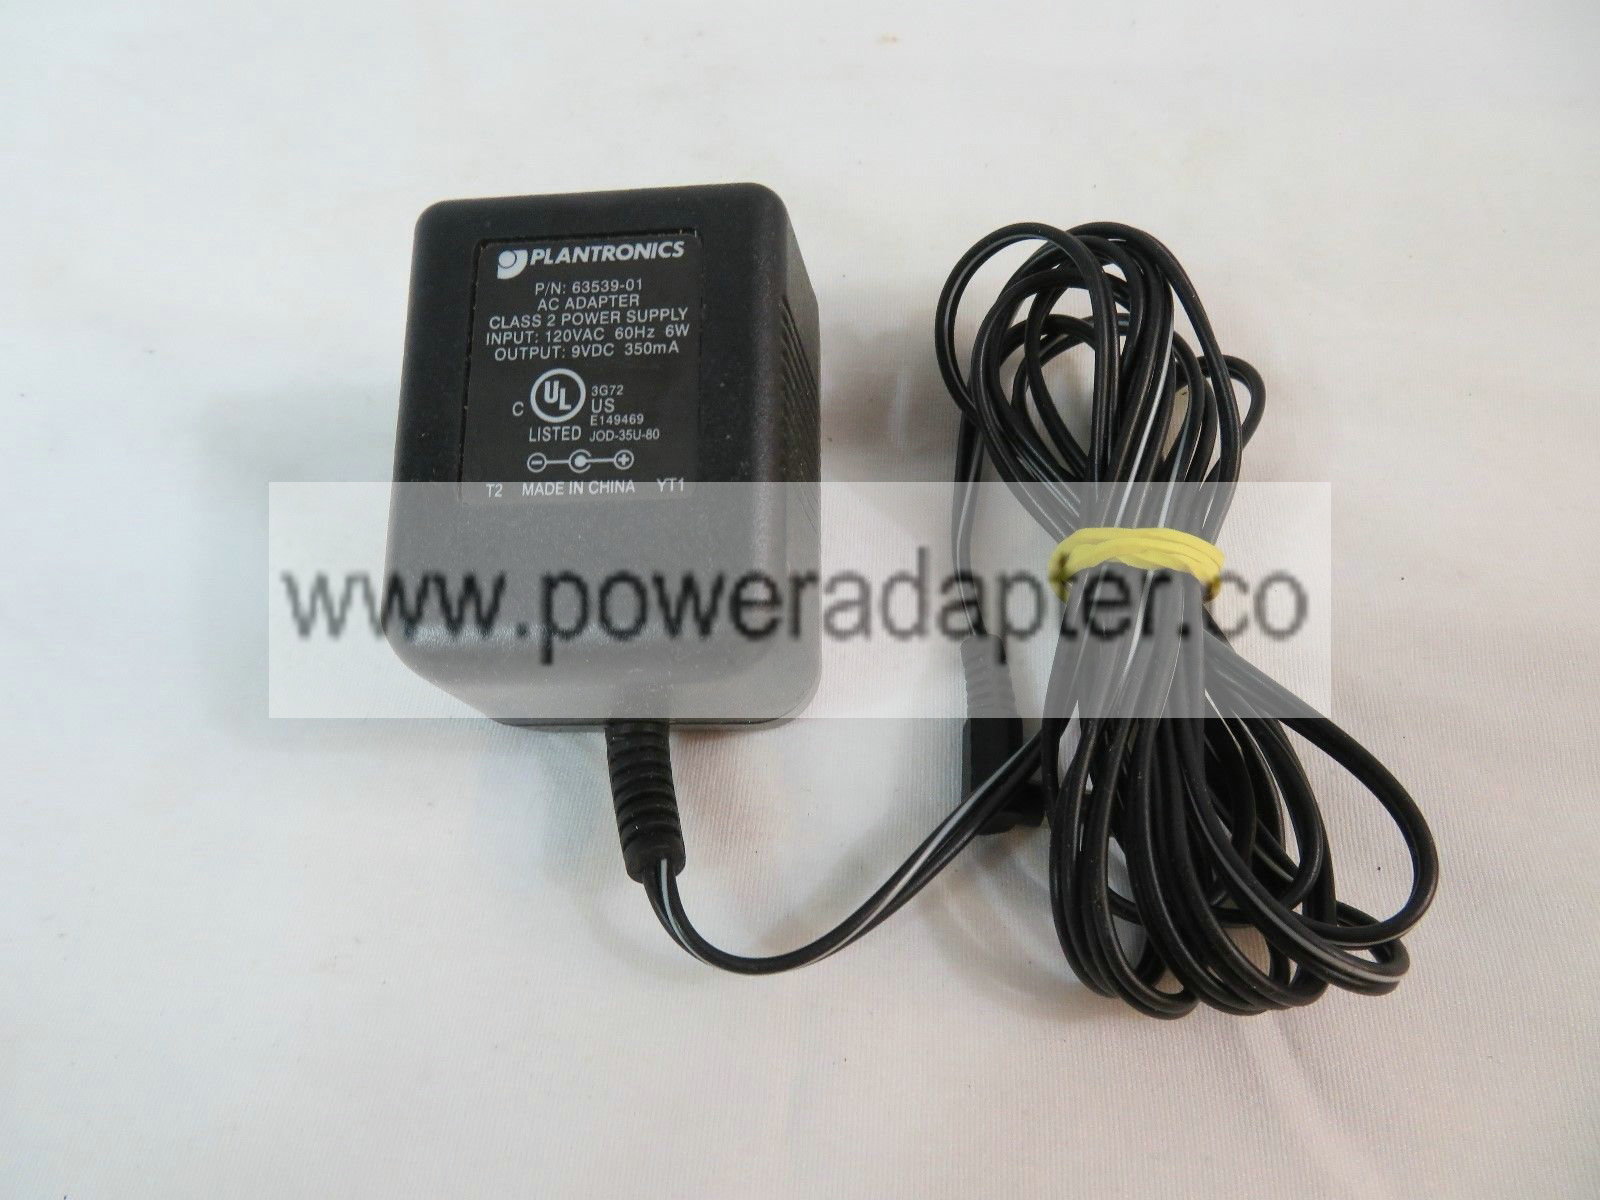 class 2 power supply Plantronics 63539-01 AC Adapter Power Supply 9V DC Brand: Plantronics Model no: 63539-01 MP